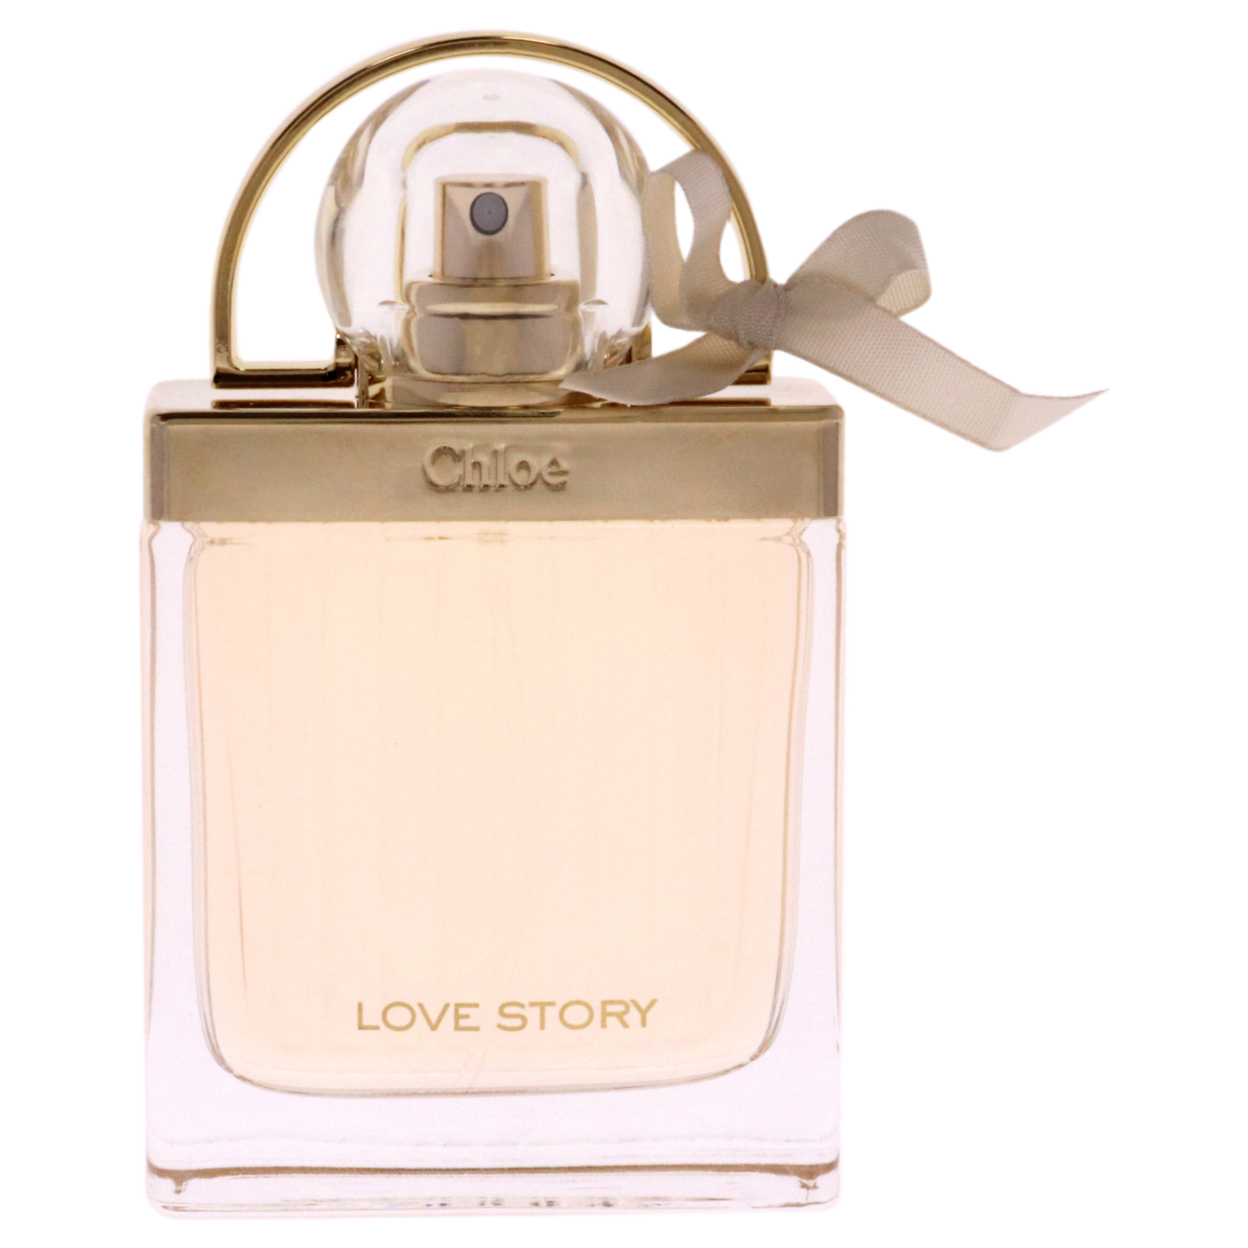 Chloe Love Story for Women Eau de Parfum Spray, 1.7 fl oz - image 2 of 6